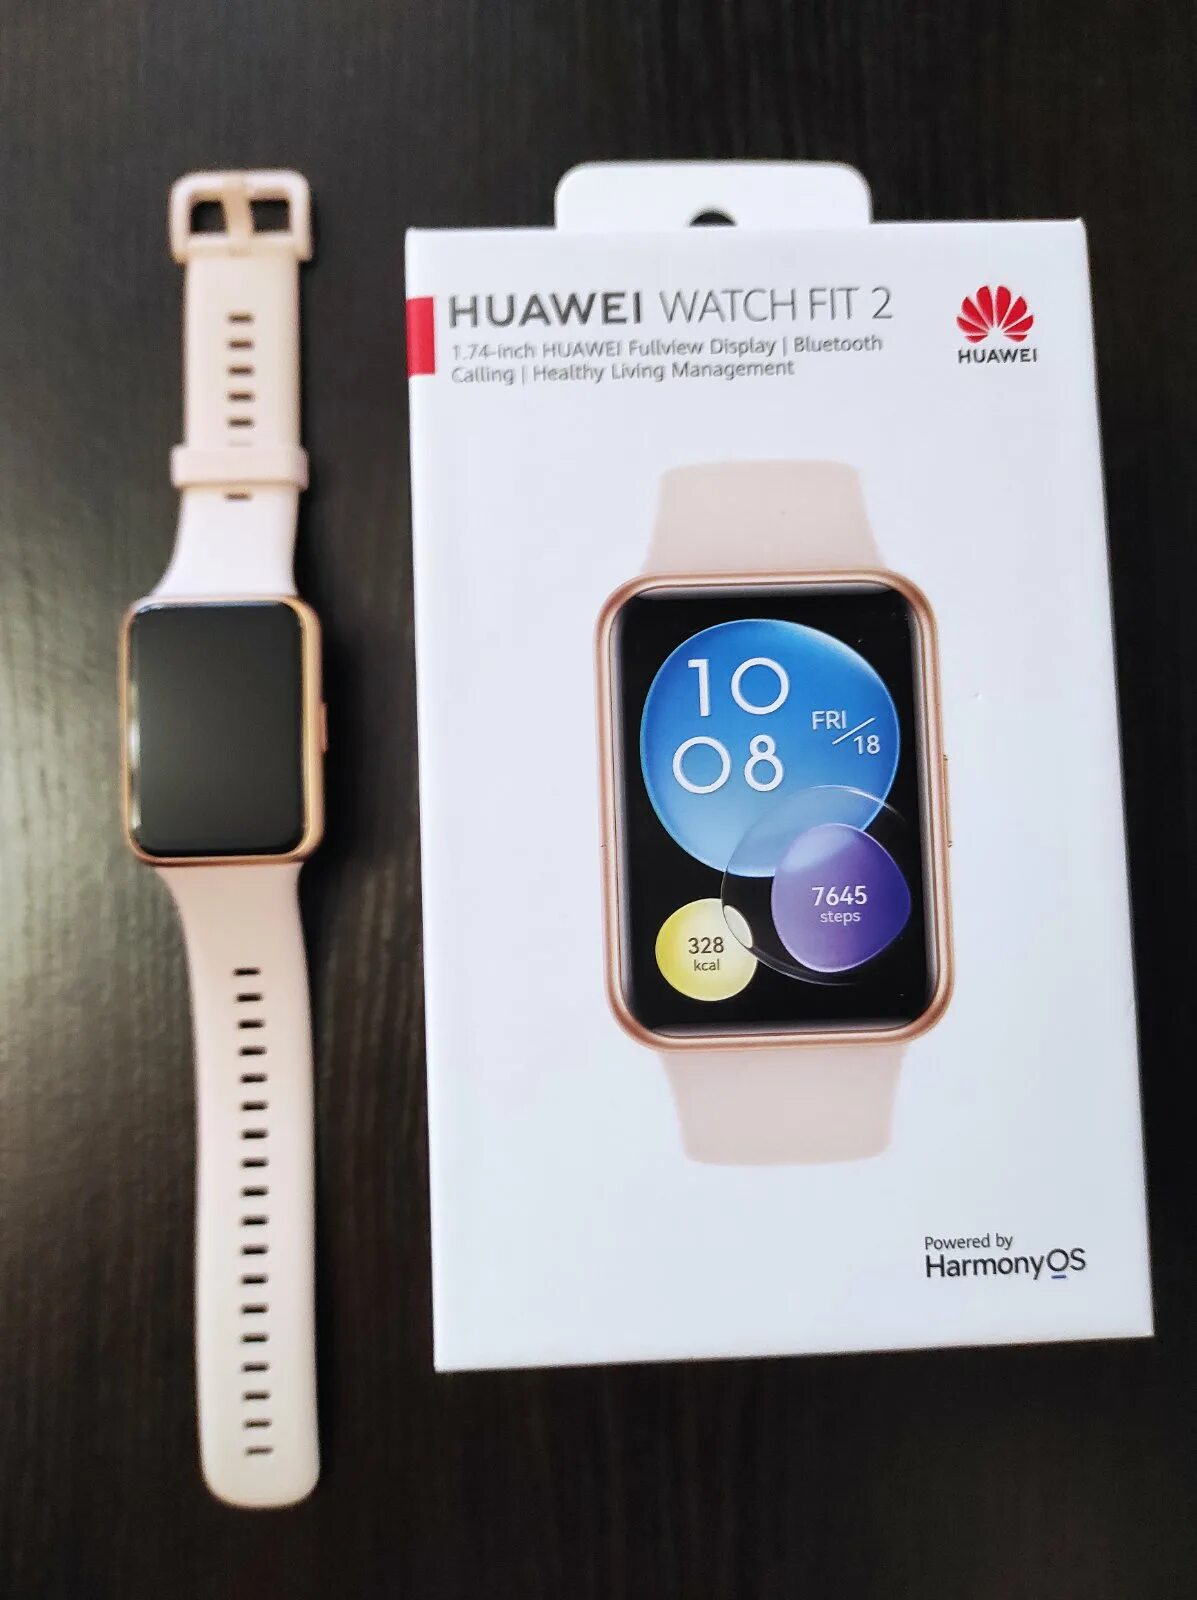 Huawei Fit 2. Смарт часы Хуавей фит 2. Смарт-часы Huawei Fit 2 Active Edition Sakura Pink (yda-b09s). Смарт часы Хуавей фит 2 Актив эдишн.